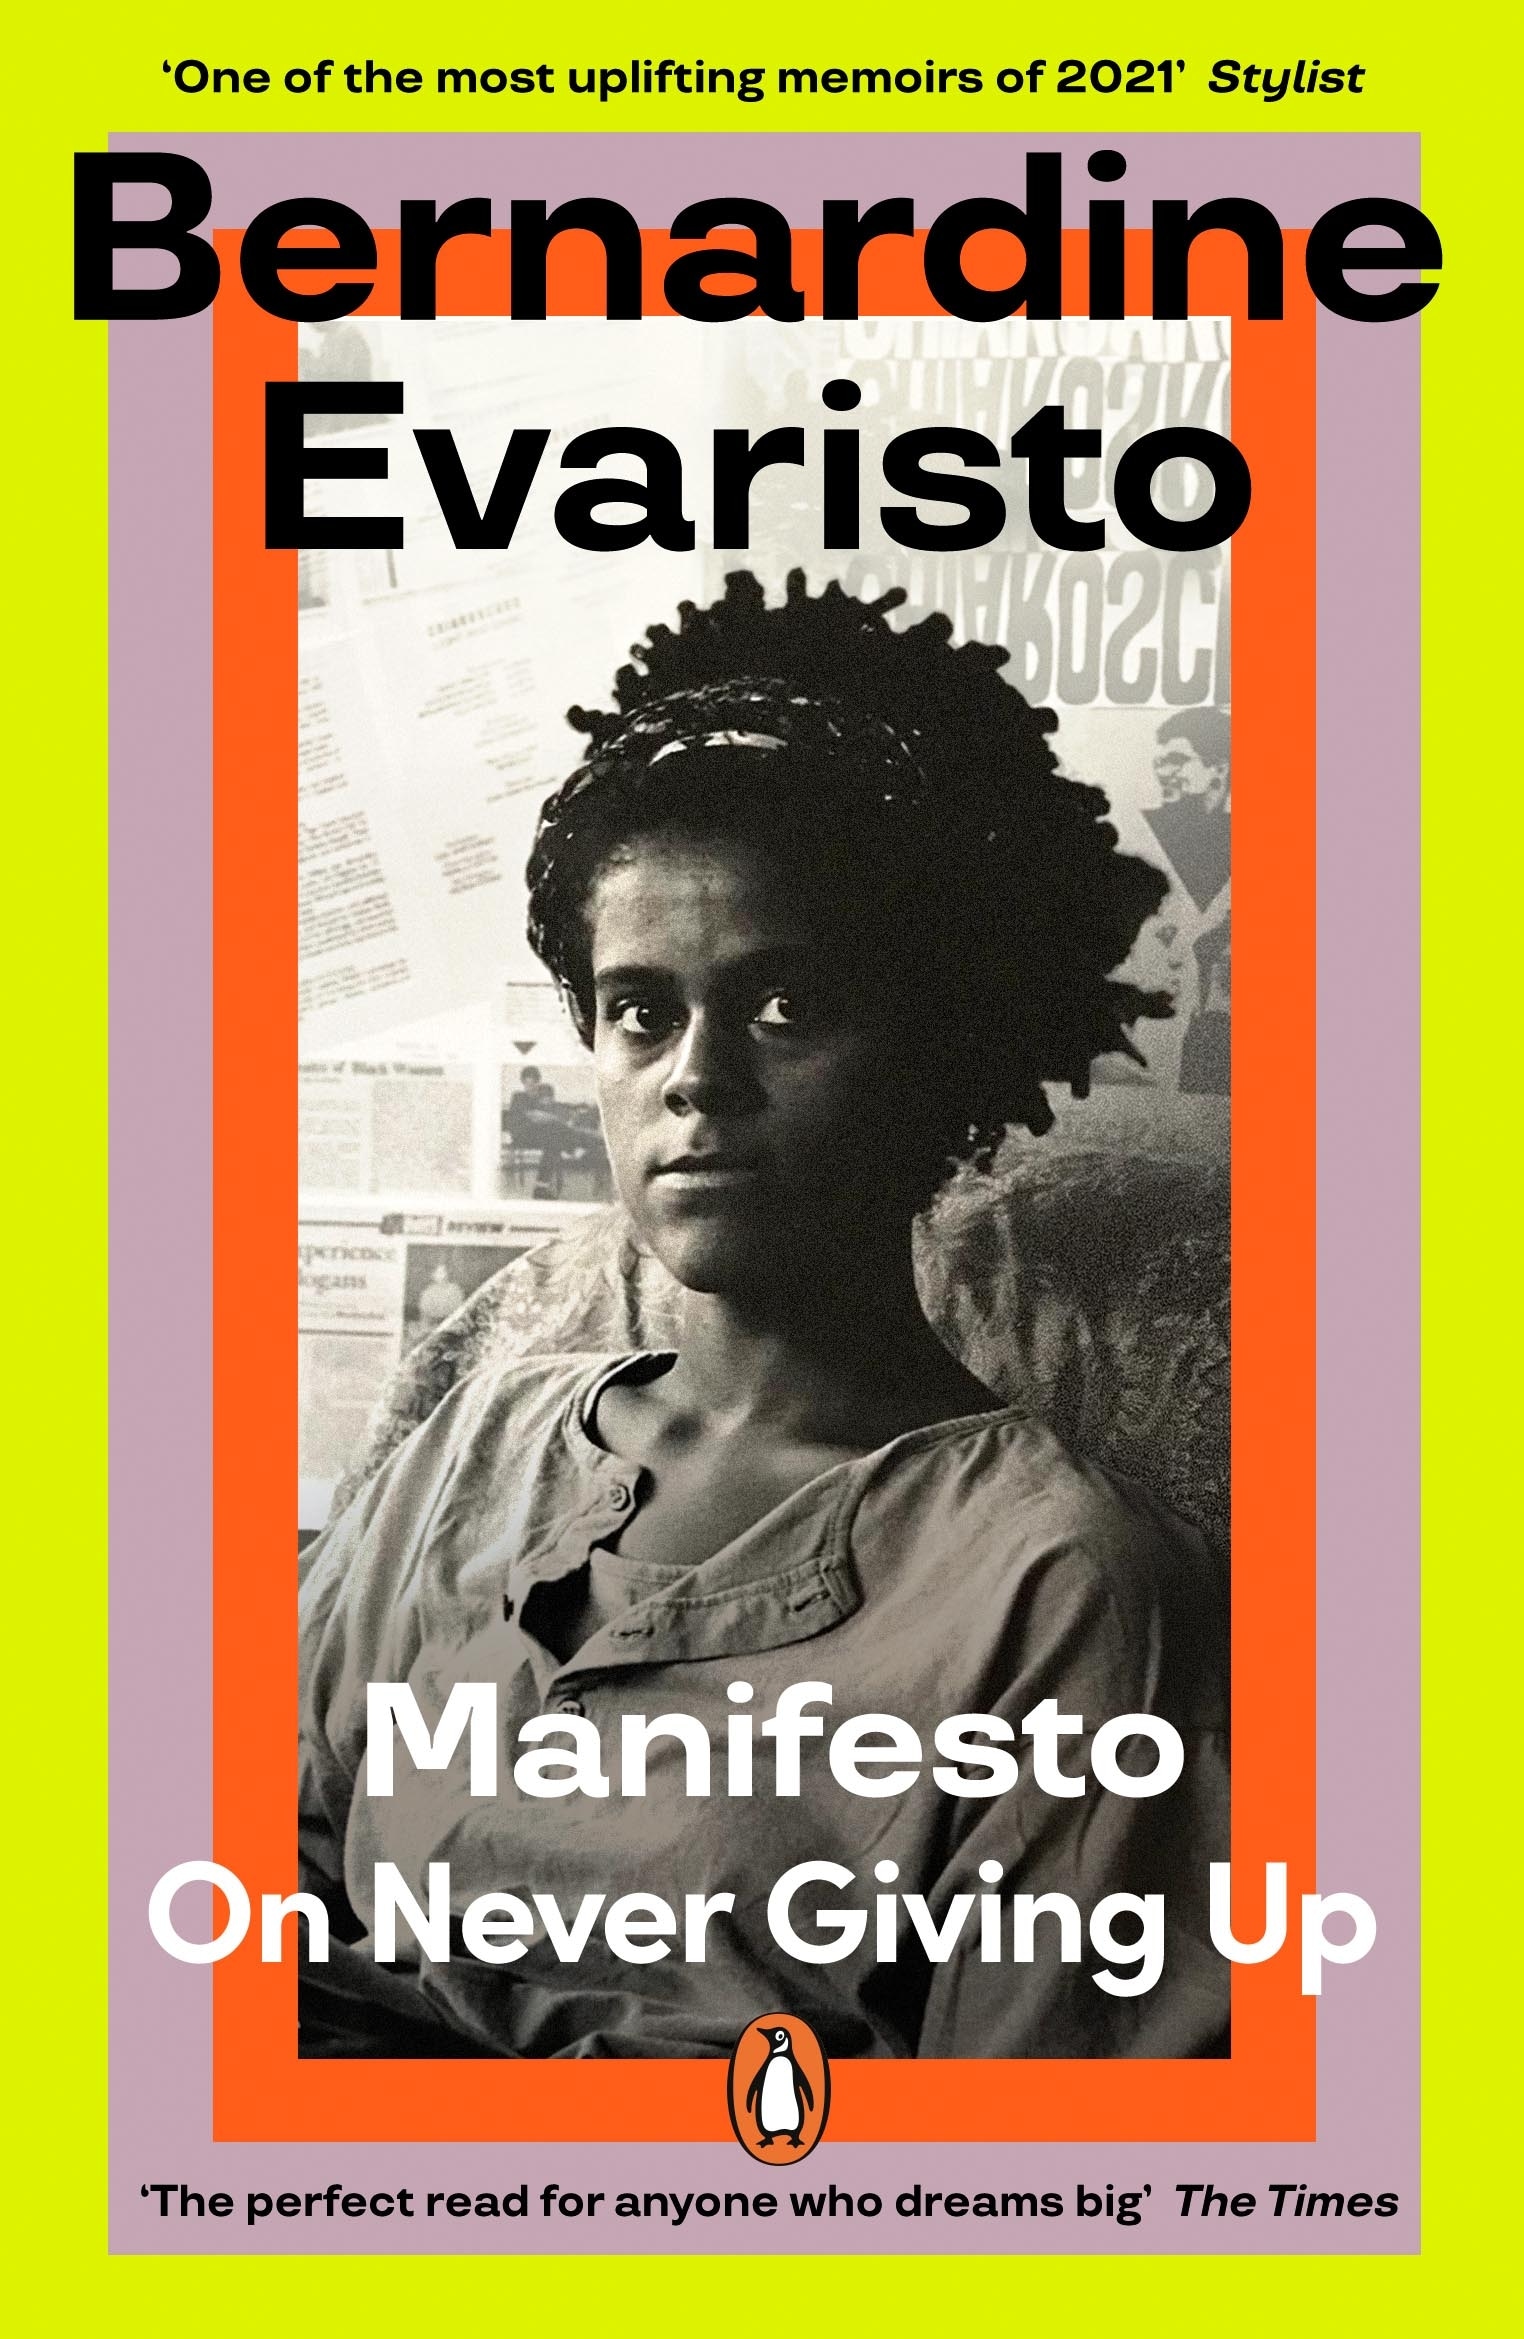 Book “Manifesto” by Bernardine Evaristo — September 22, 2022